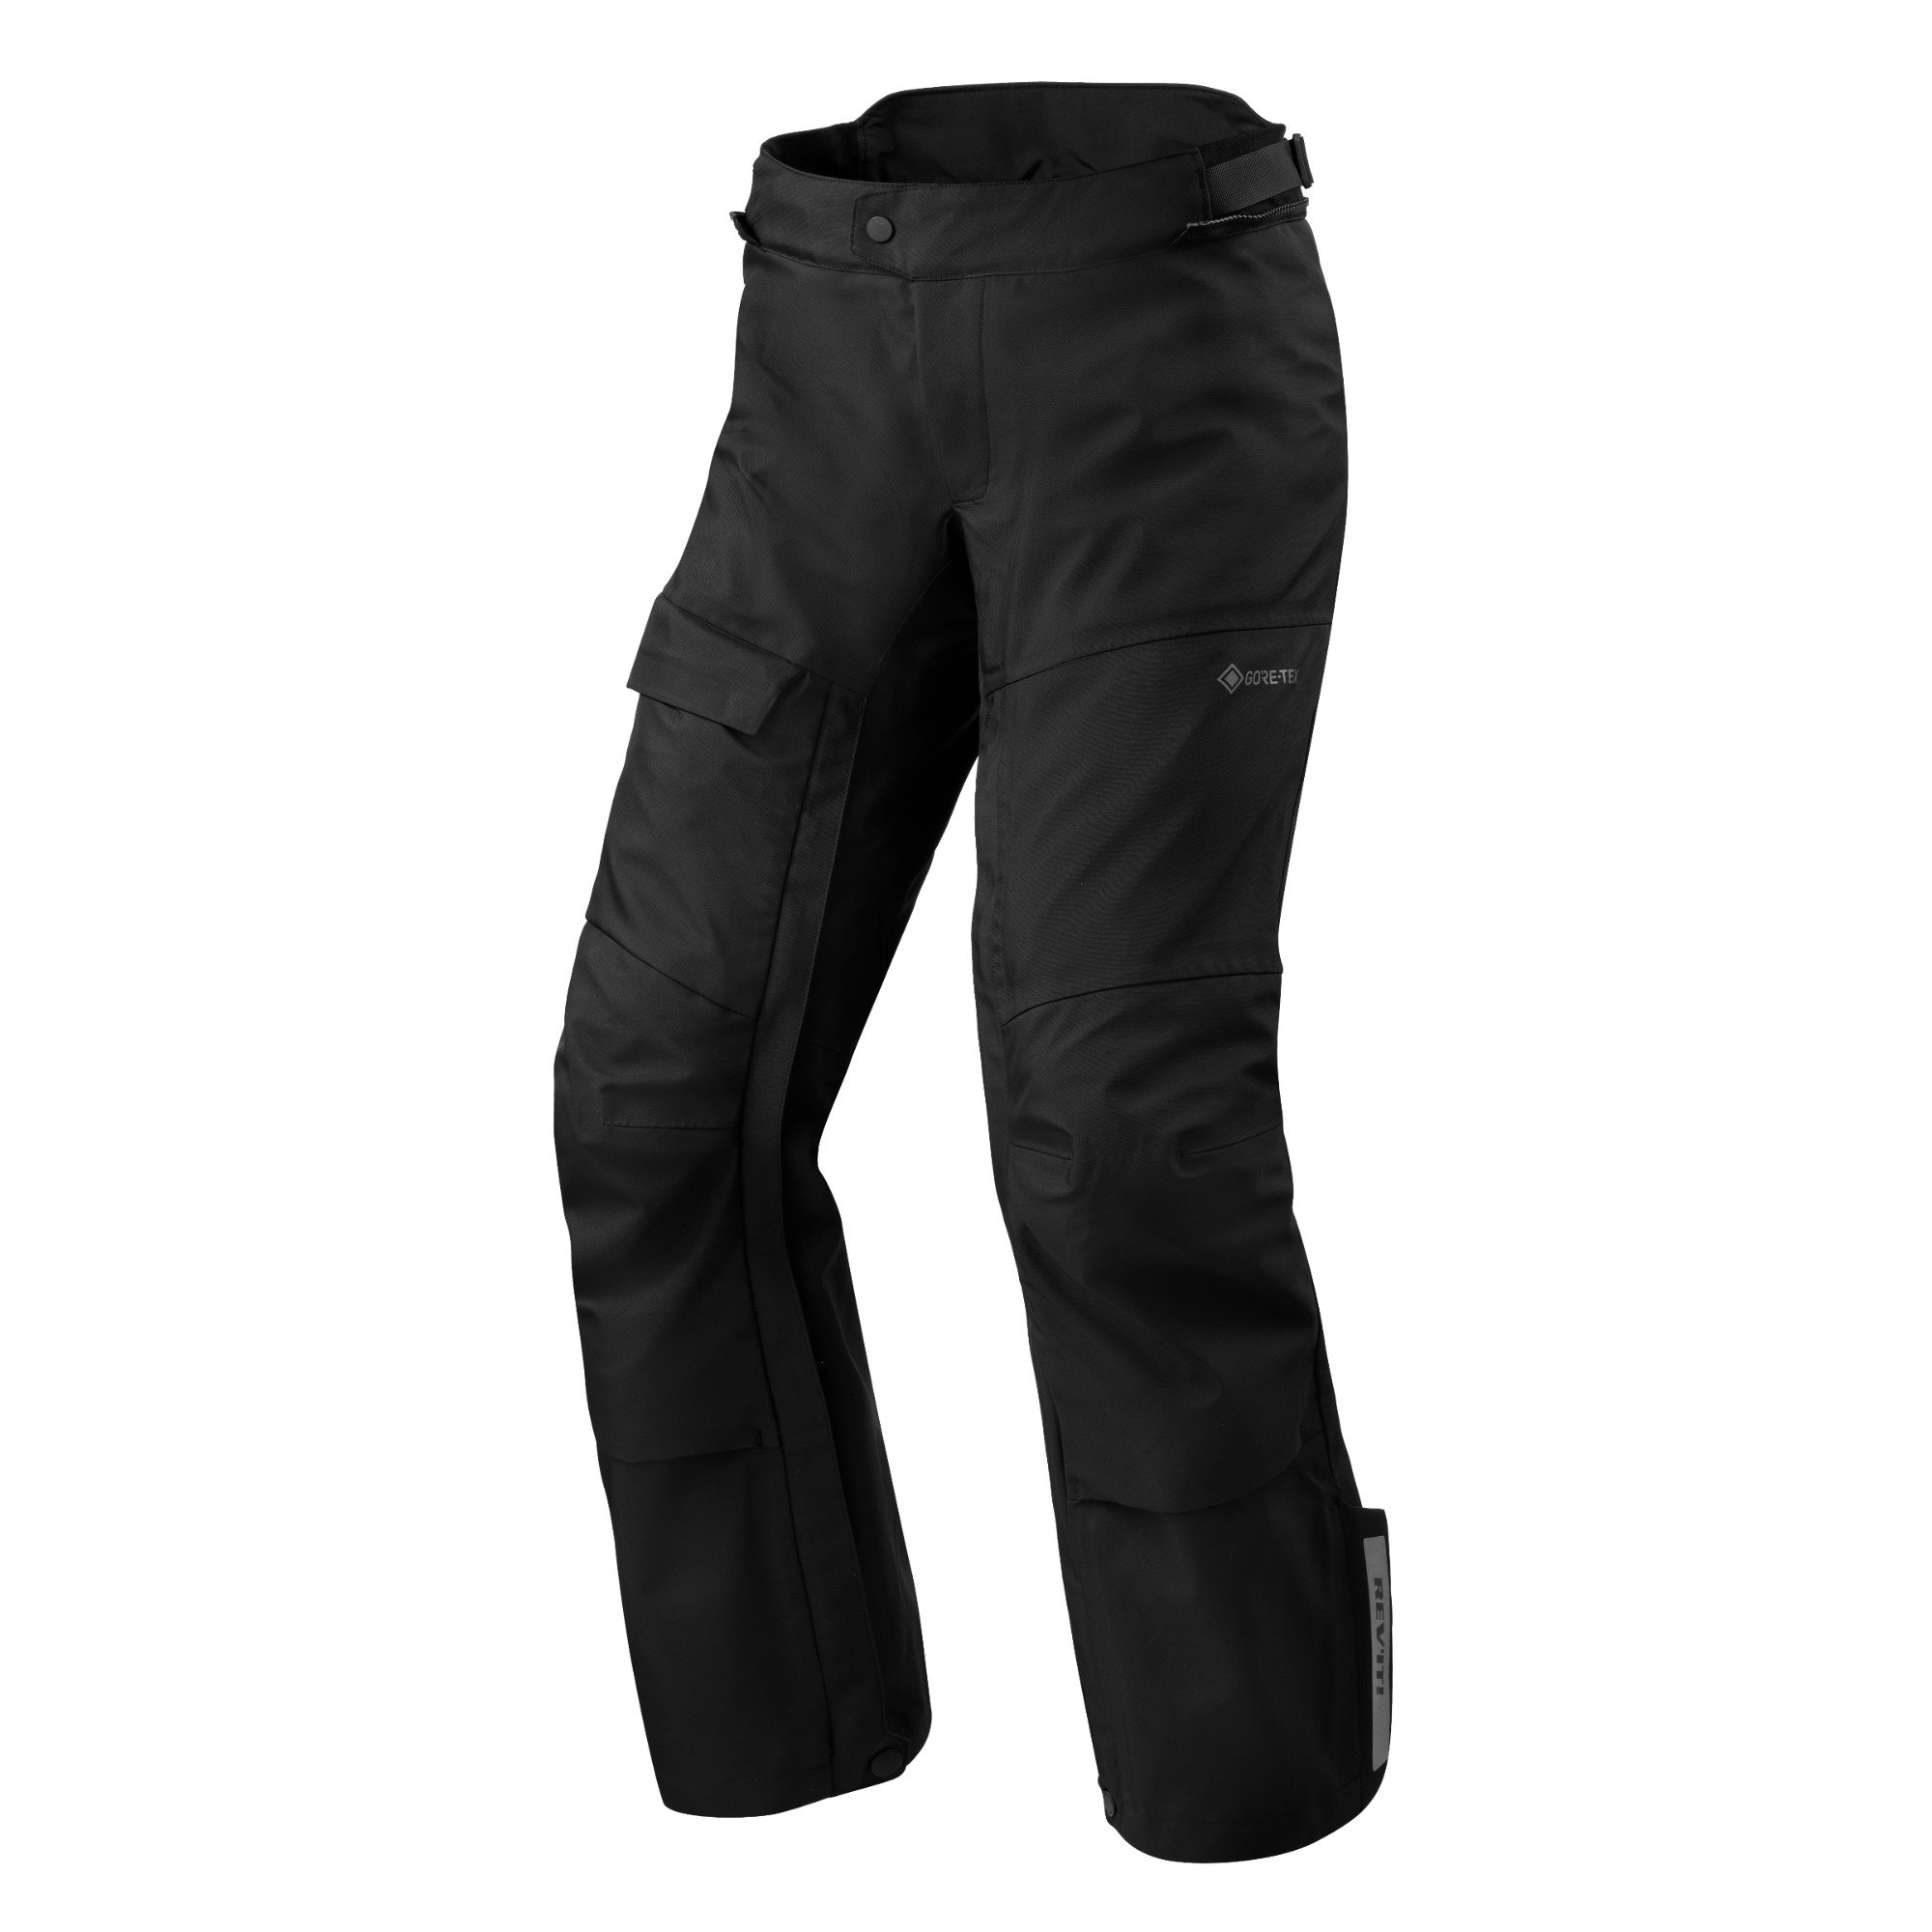 Image of REV'IT! Pants Alpinus GTX Black Long Motorcycle Pants Size M ID 8700001363419